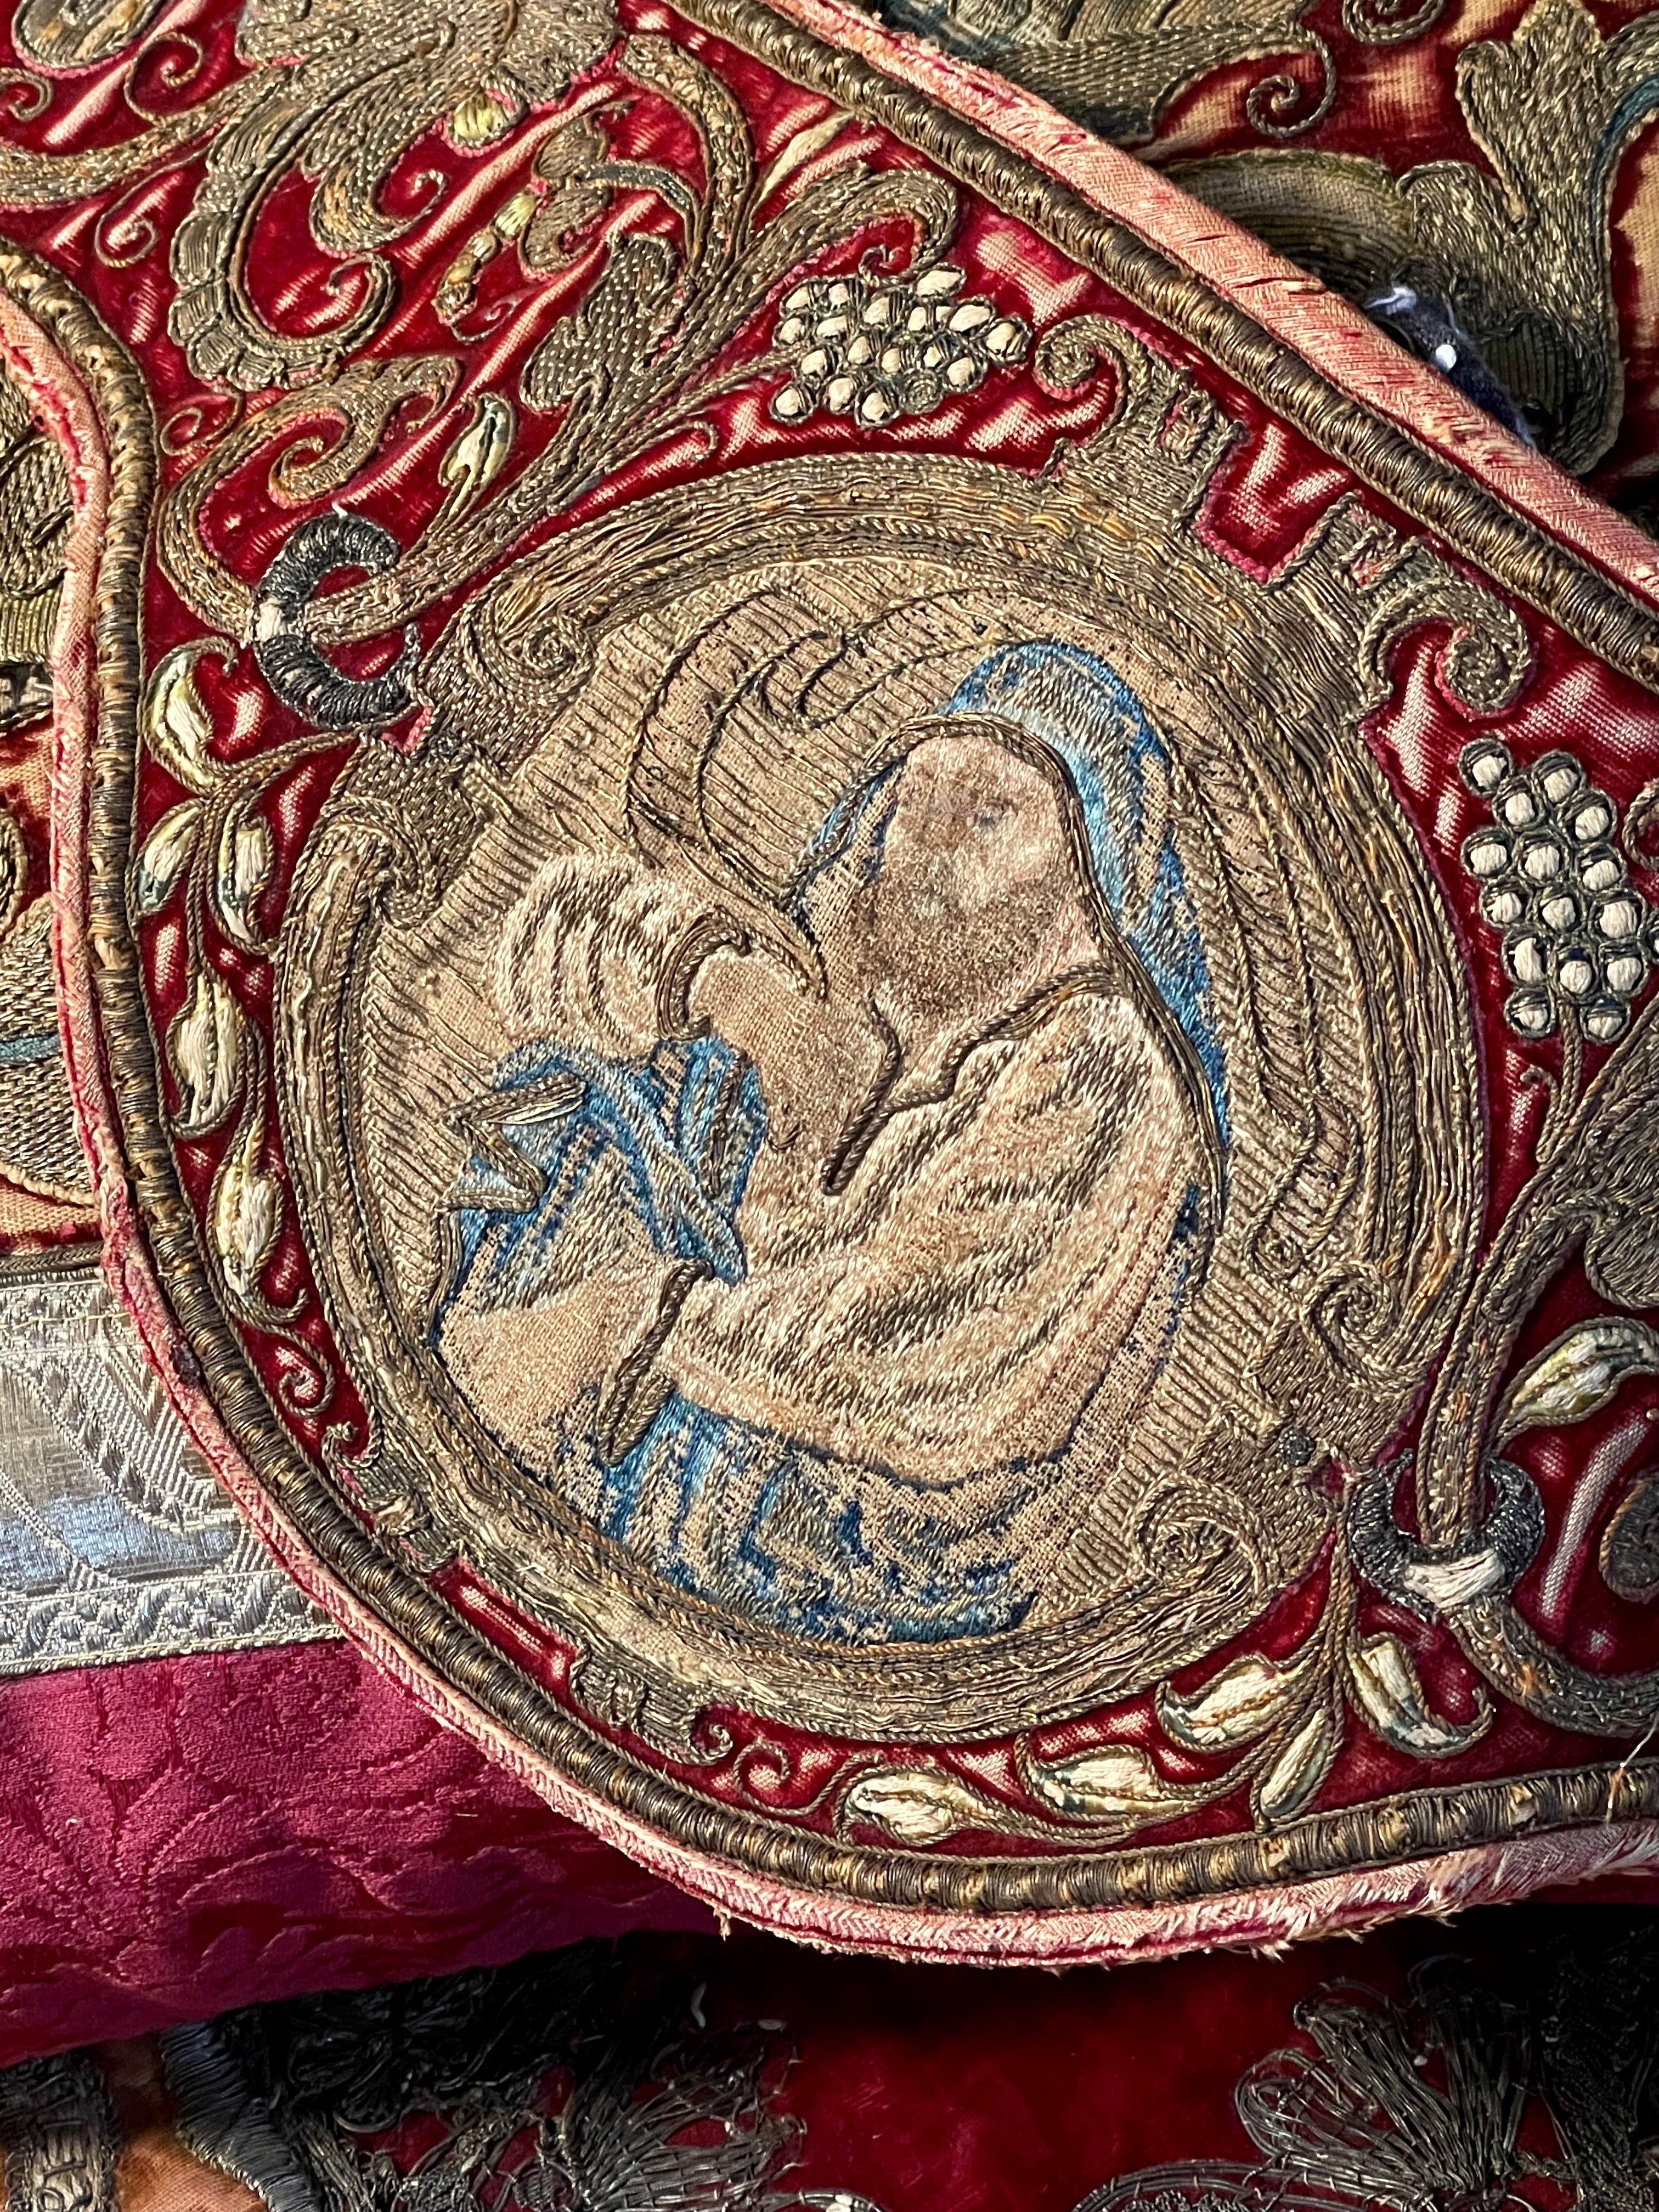 16th Century Embroidery Ecclesiatic Amice Saint